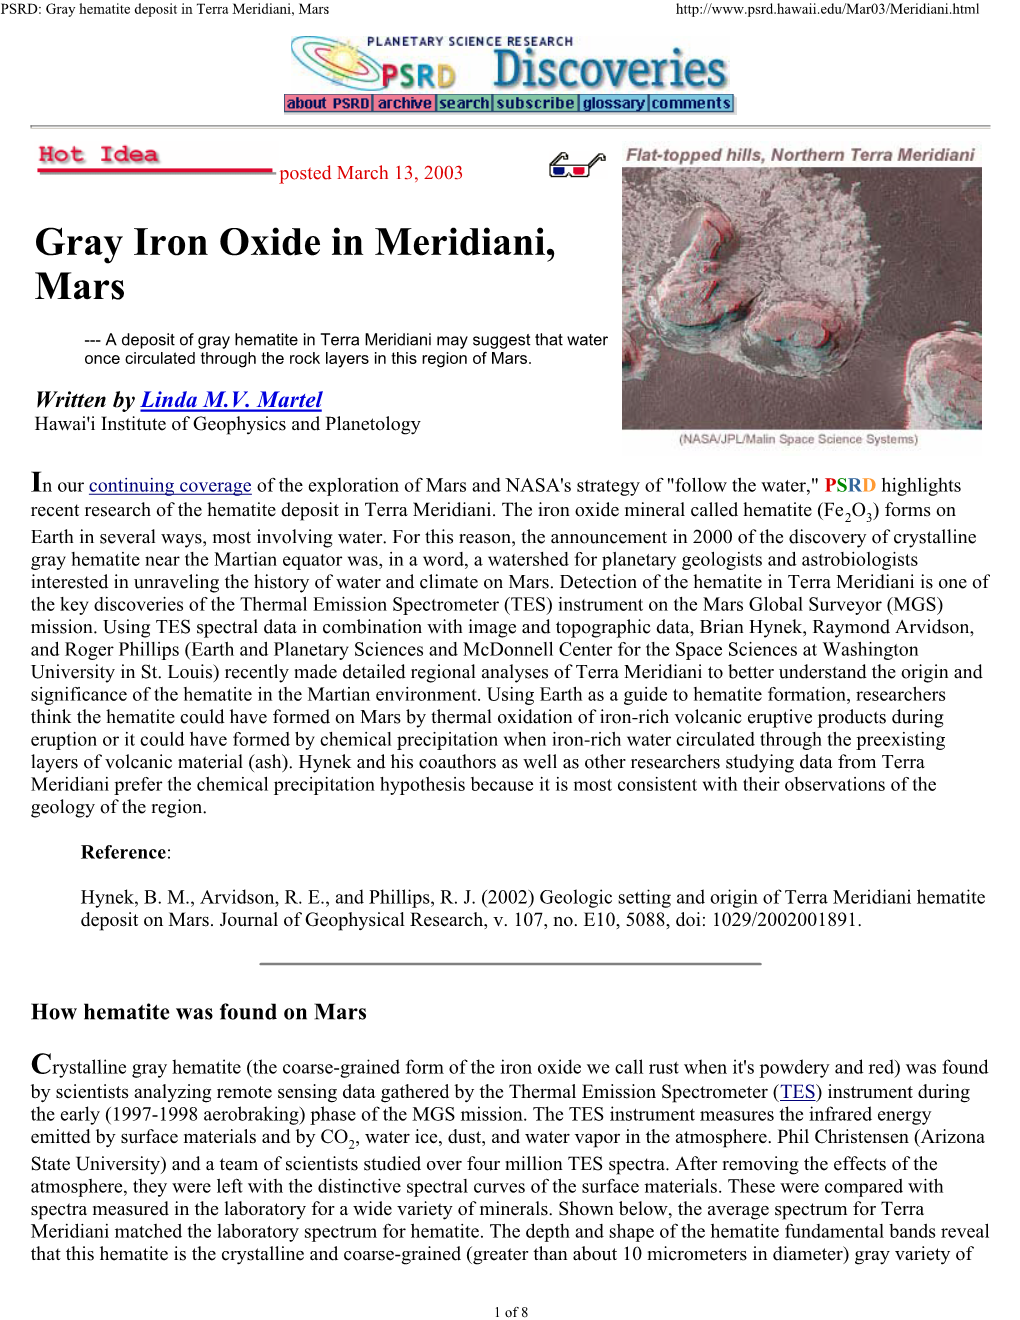 Gray Iron Oxide in Meridiani, Mars